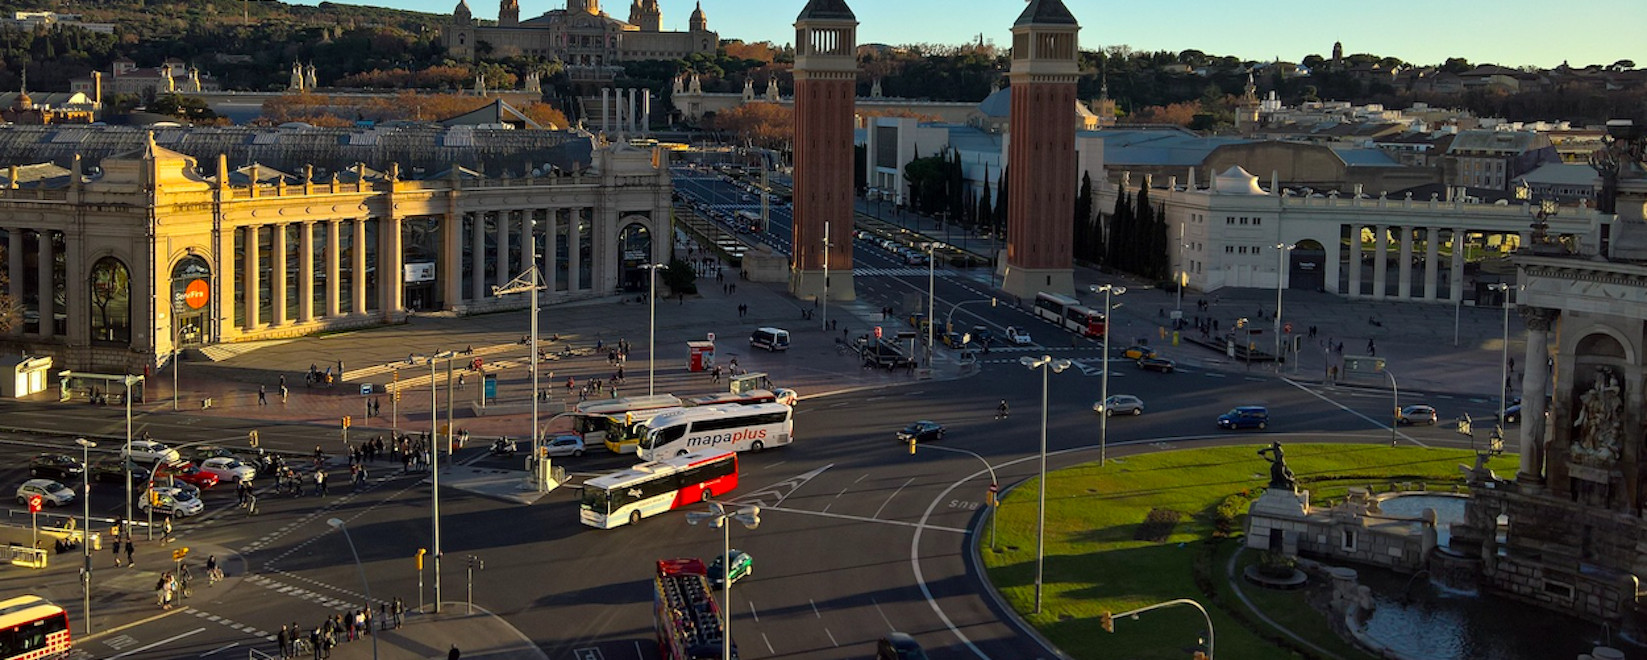 Imagen de archivo de la plaza de Espanya de Barcelona / PIXABAY